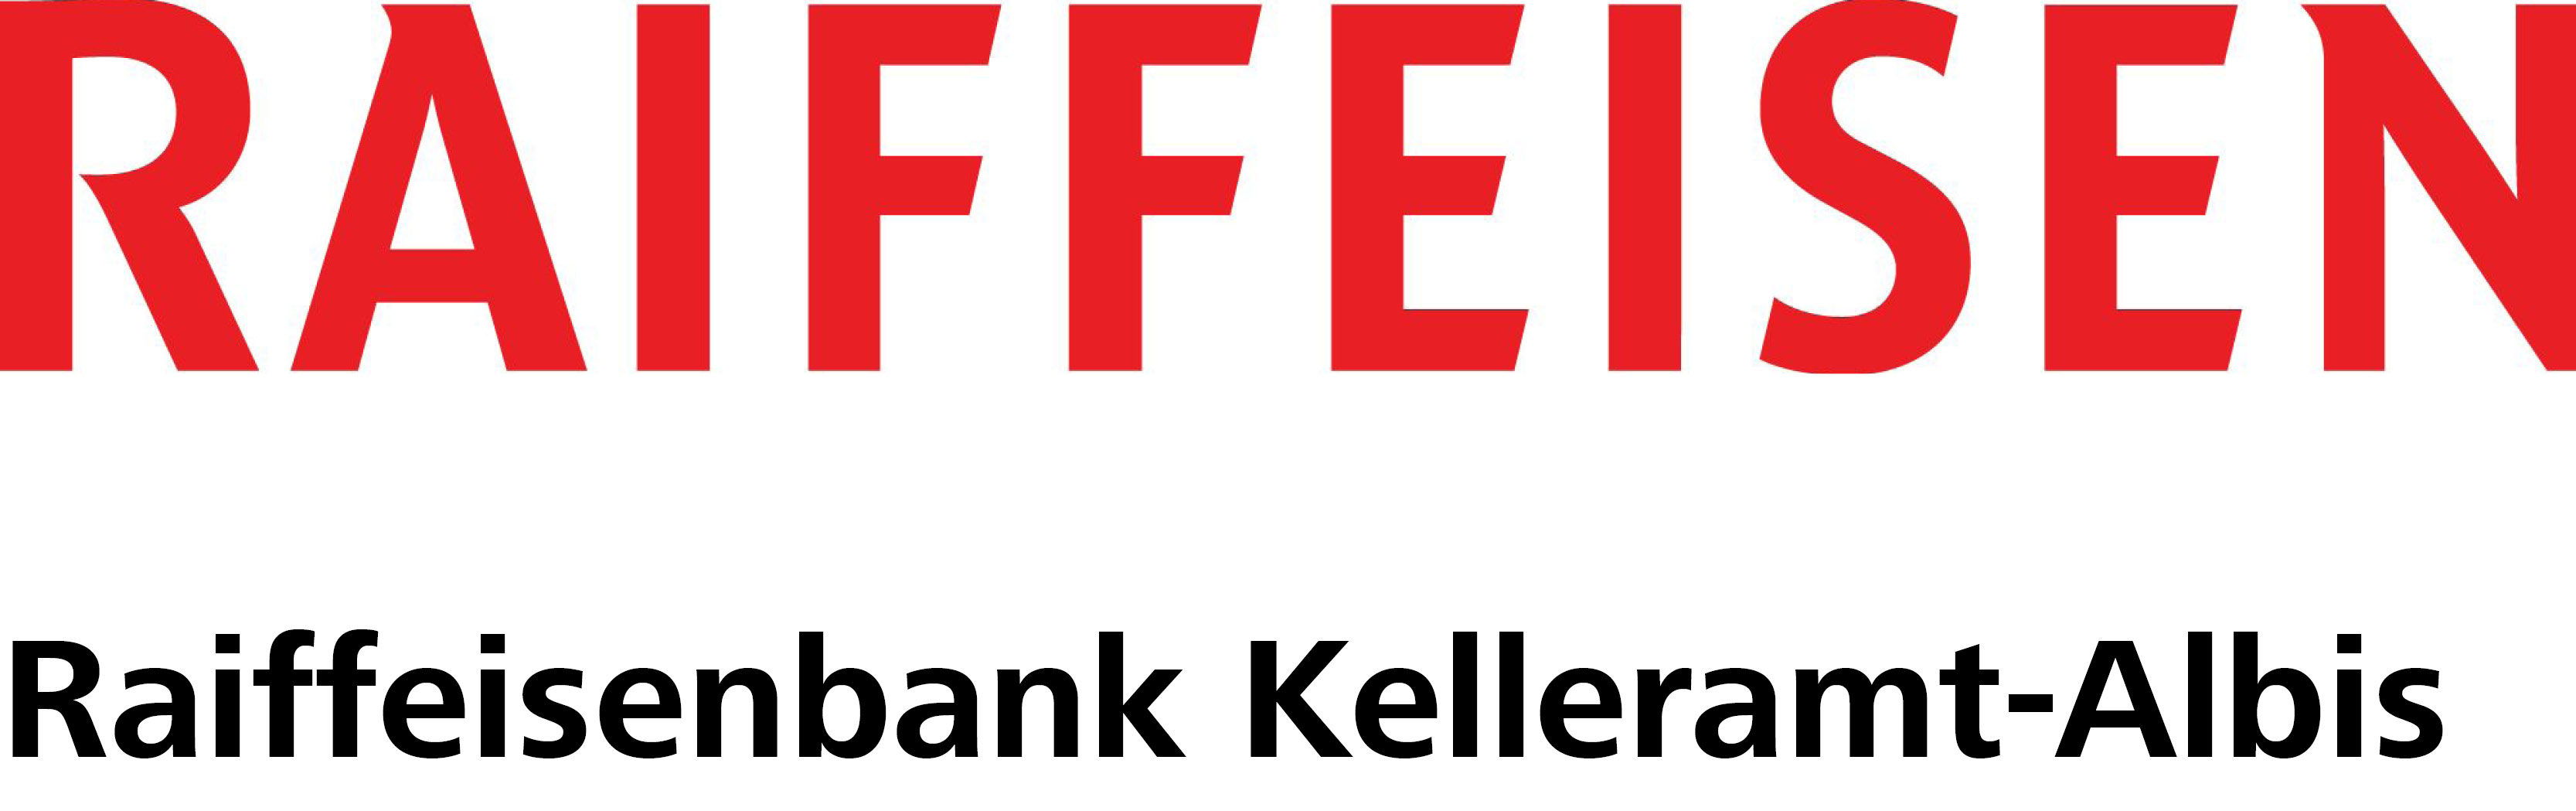 Raiffeisenbank Kelleramt-Albis